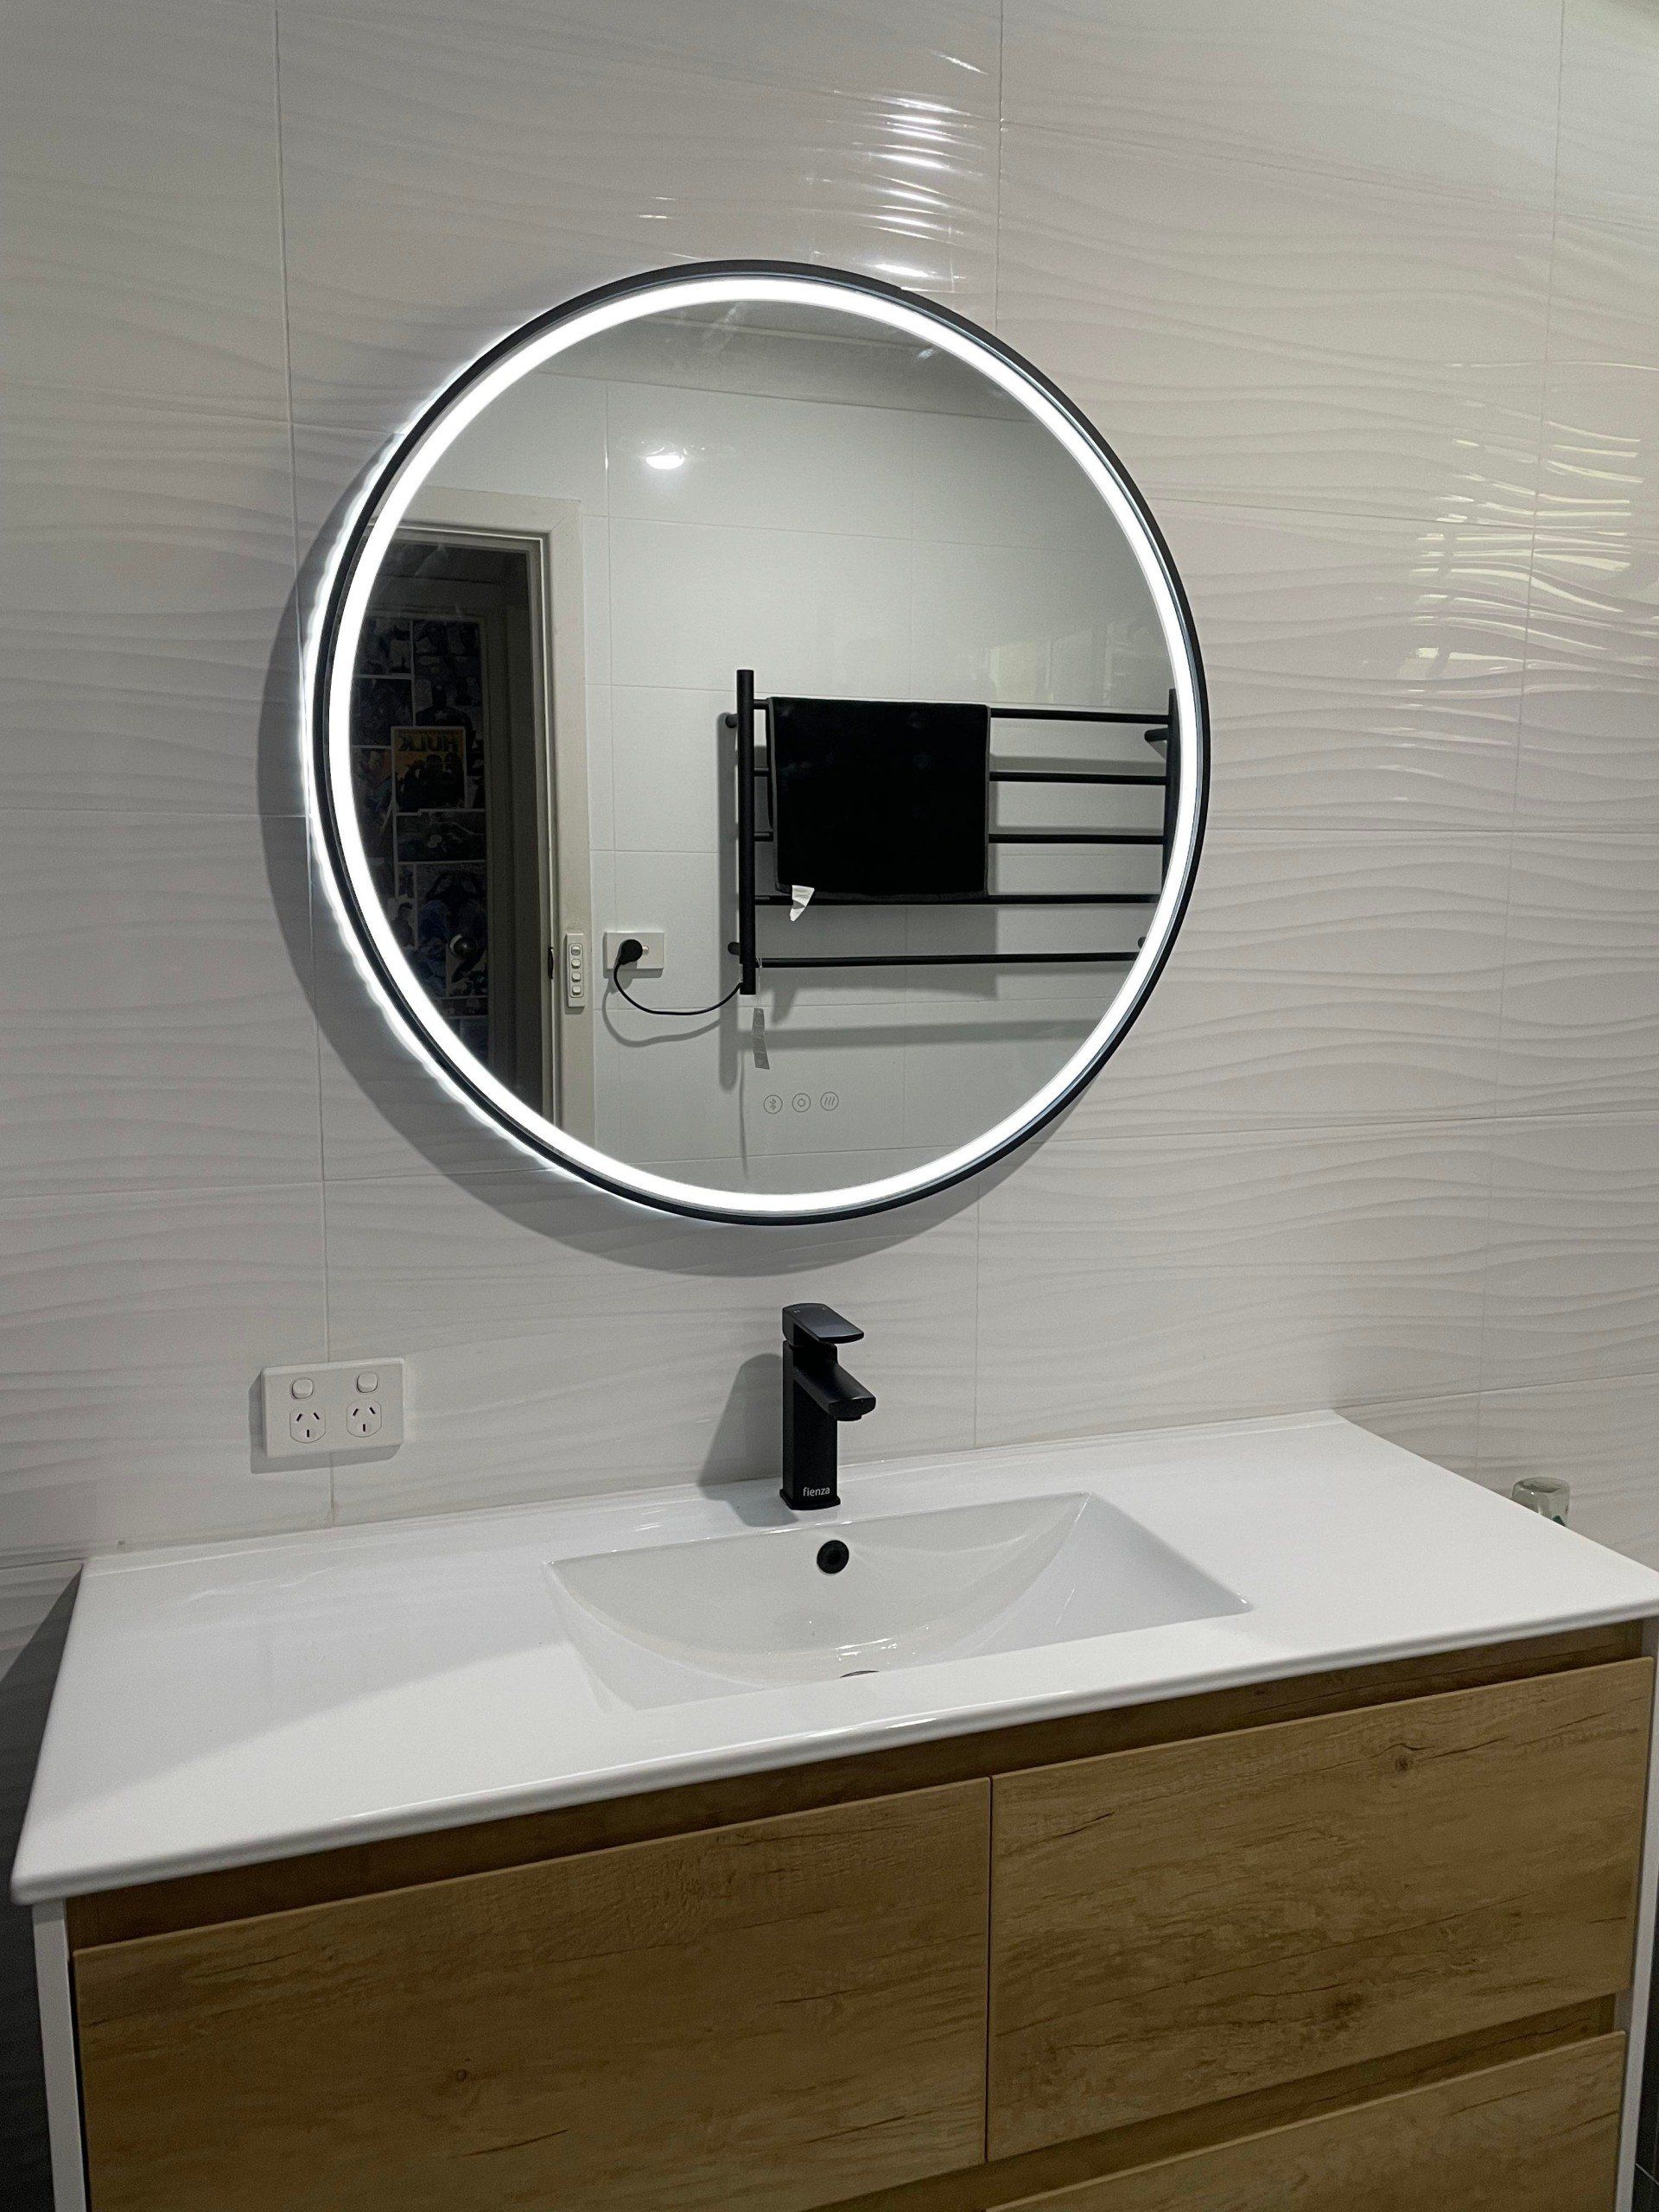 New LED strip lighting installation on bathroom mirror